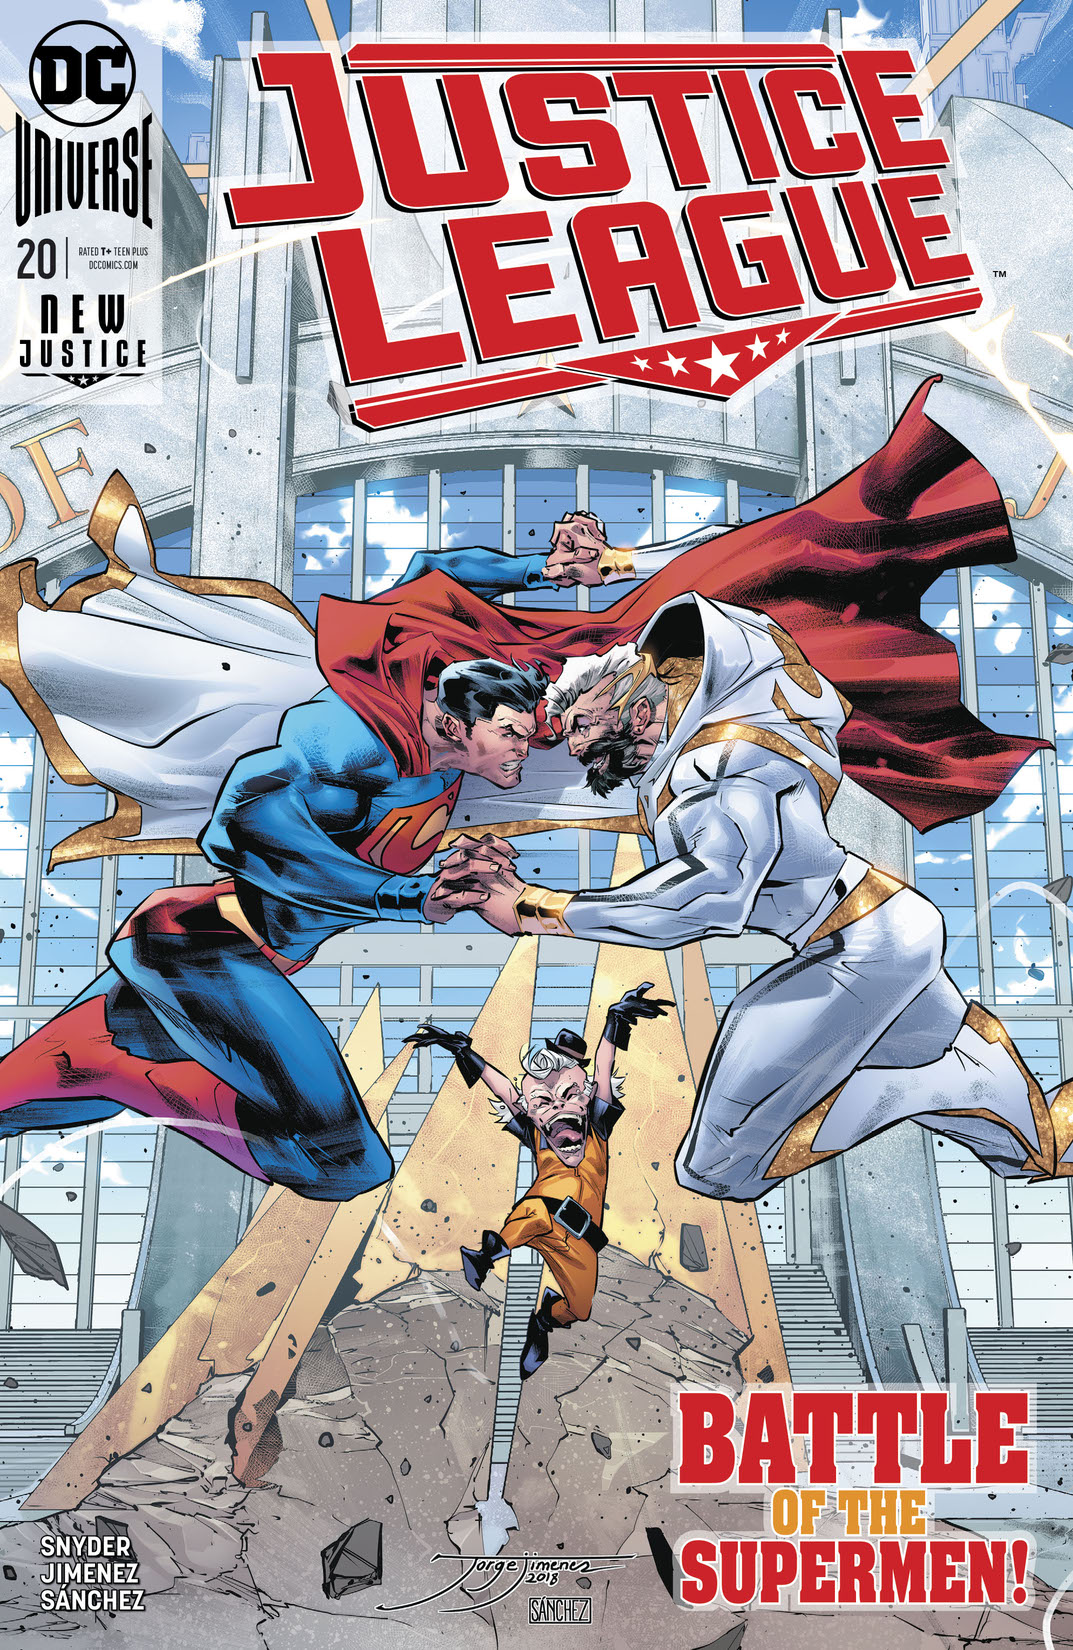 Justice League (2018-) #20 preview images